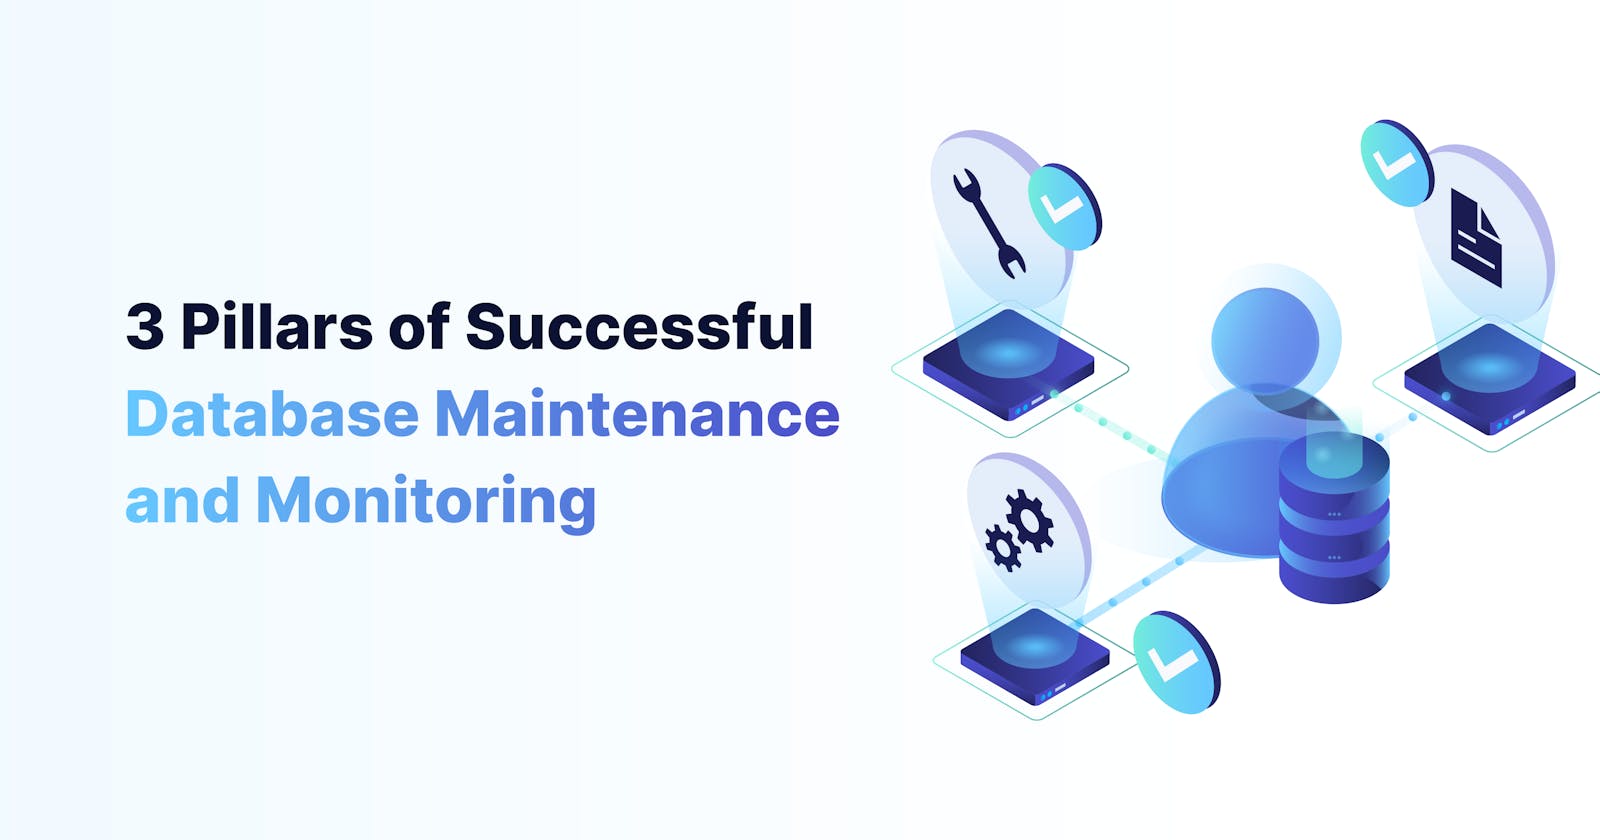 The Three Pillars of Successful Database Maintenance and Monitoring